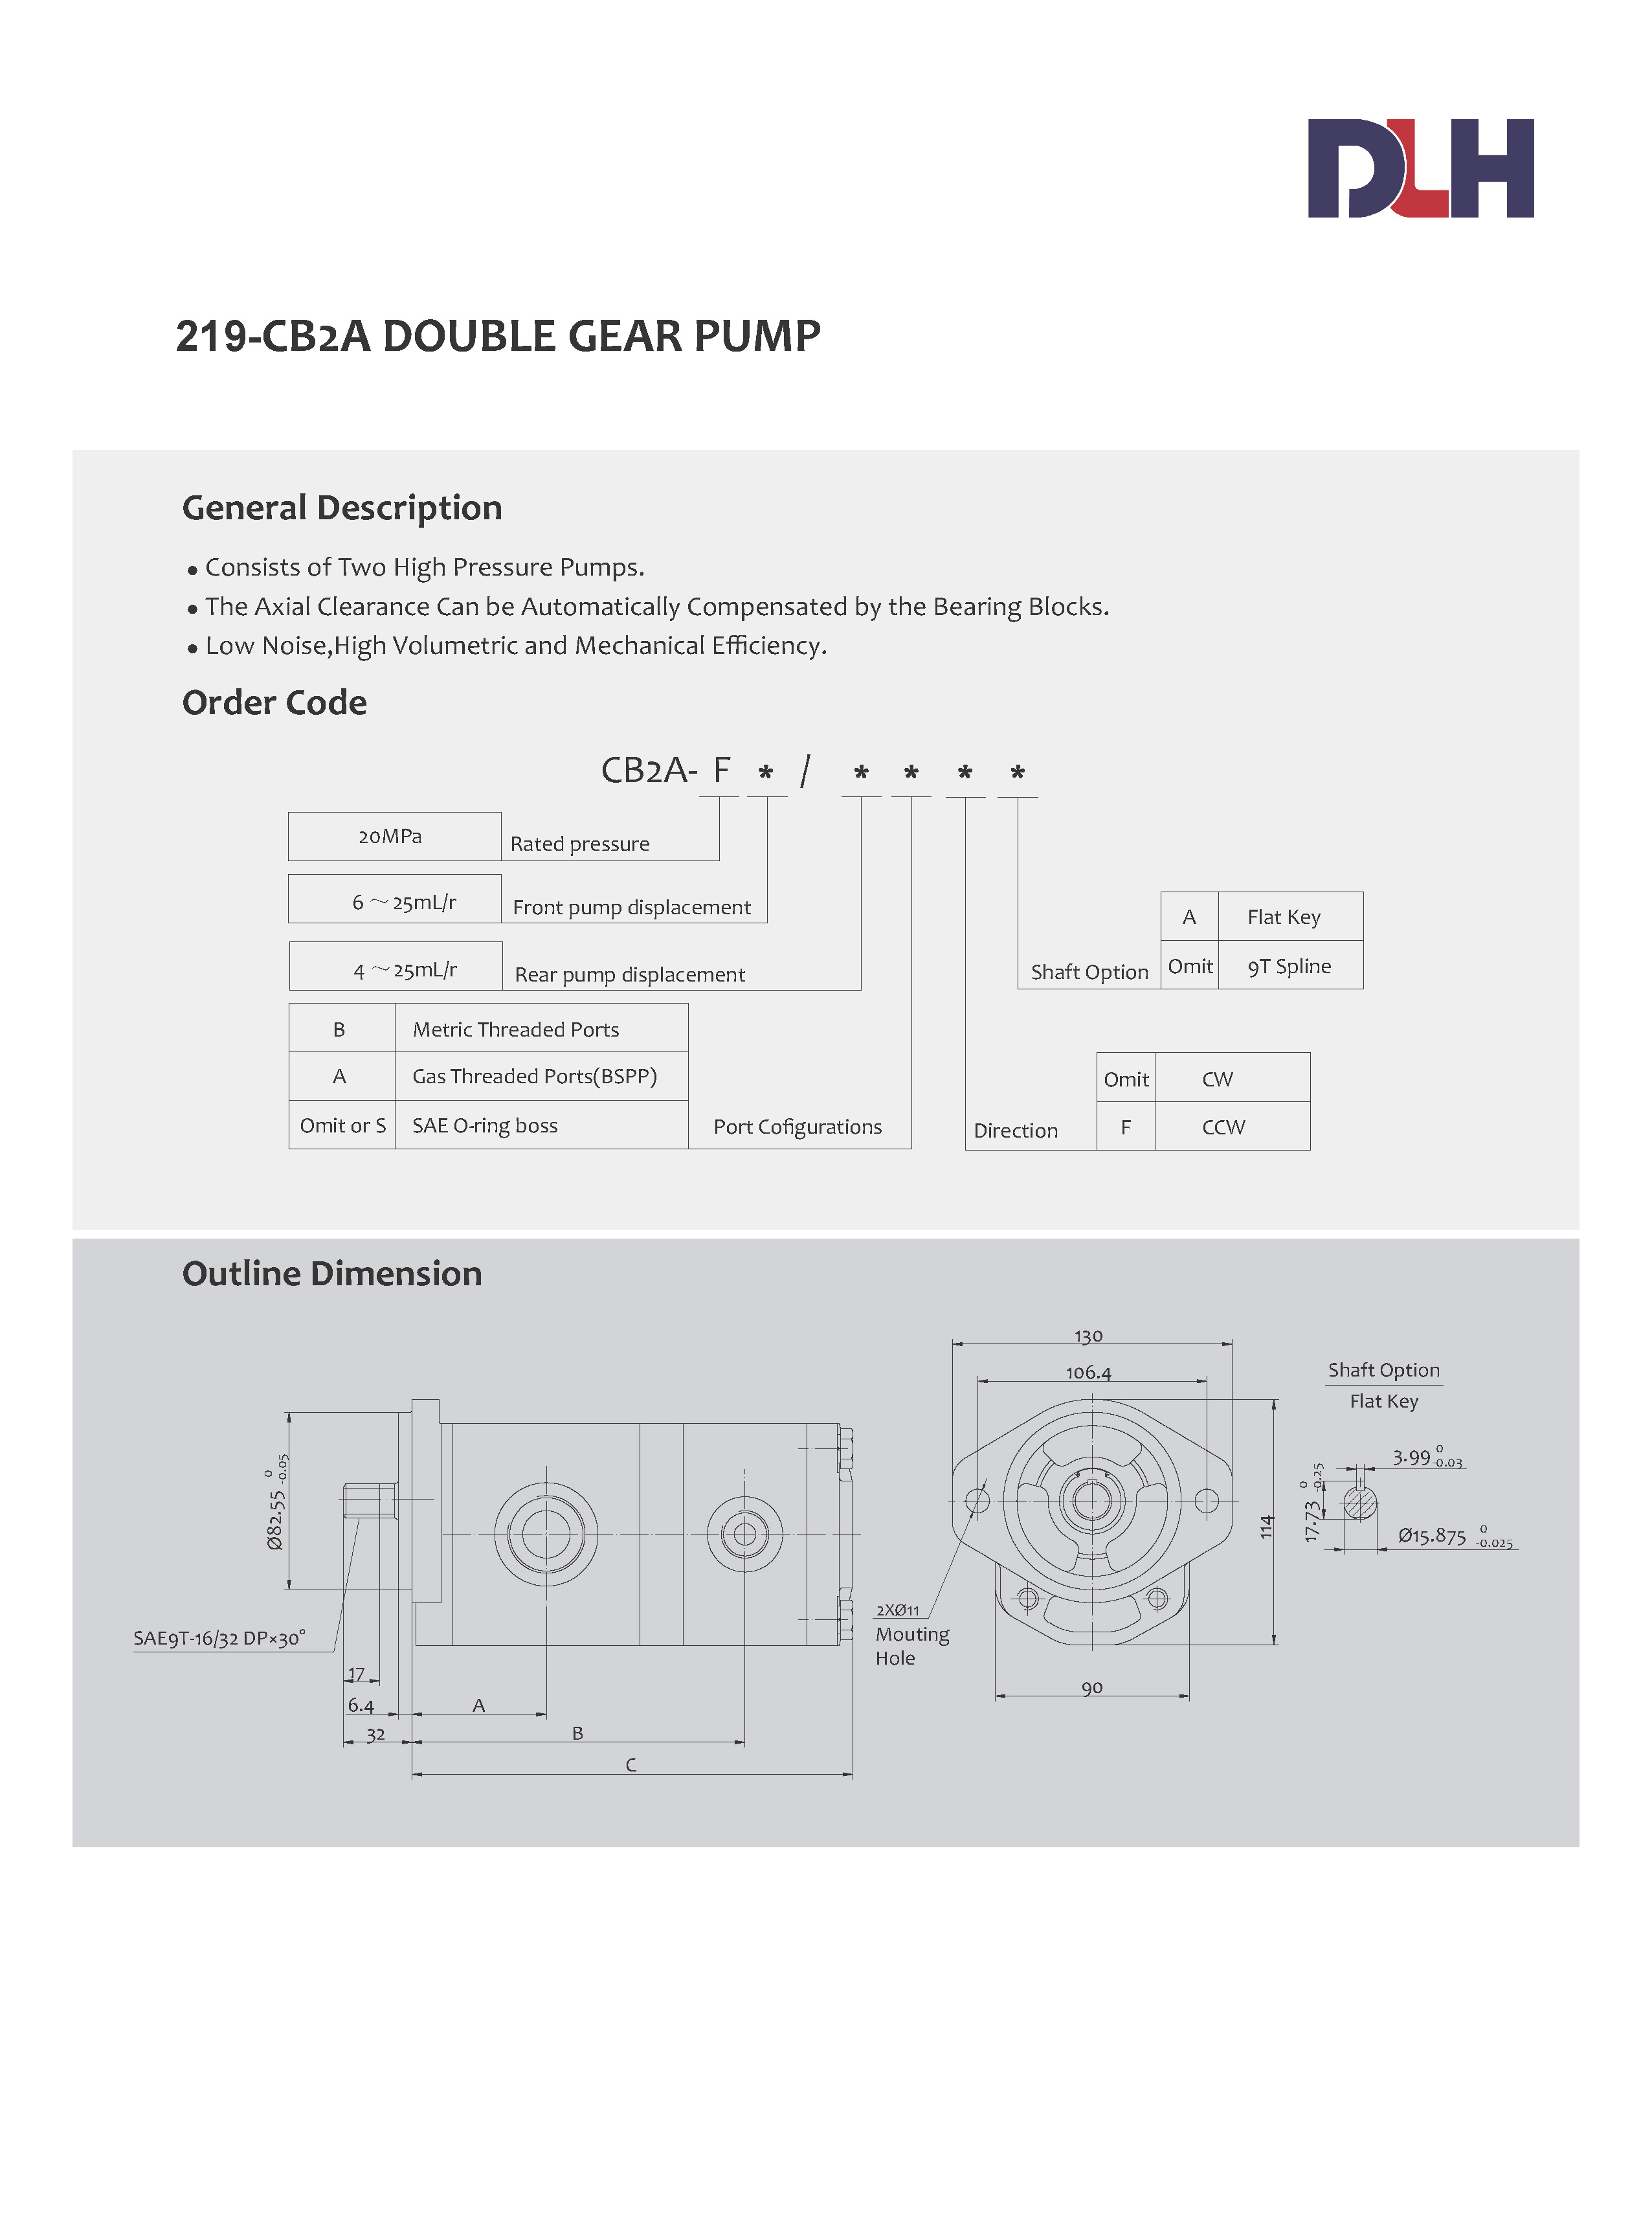 CB2A Double Gear Pump